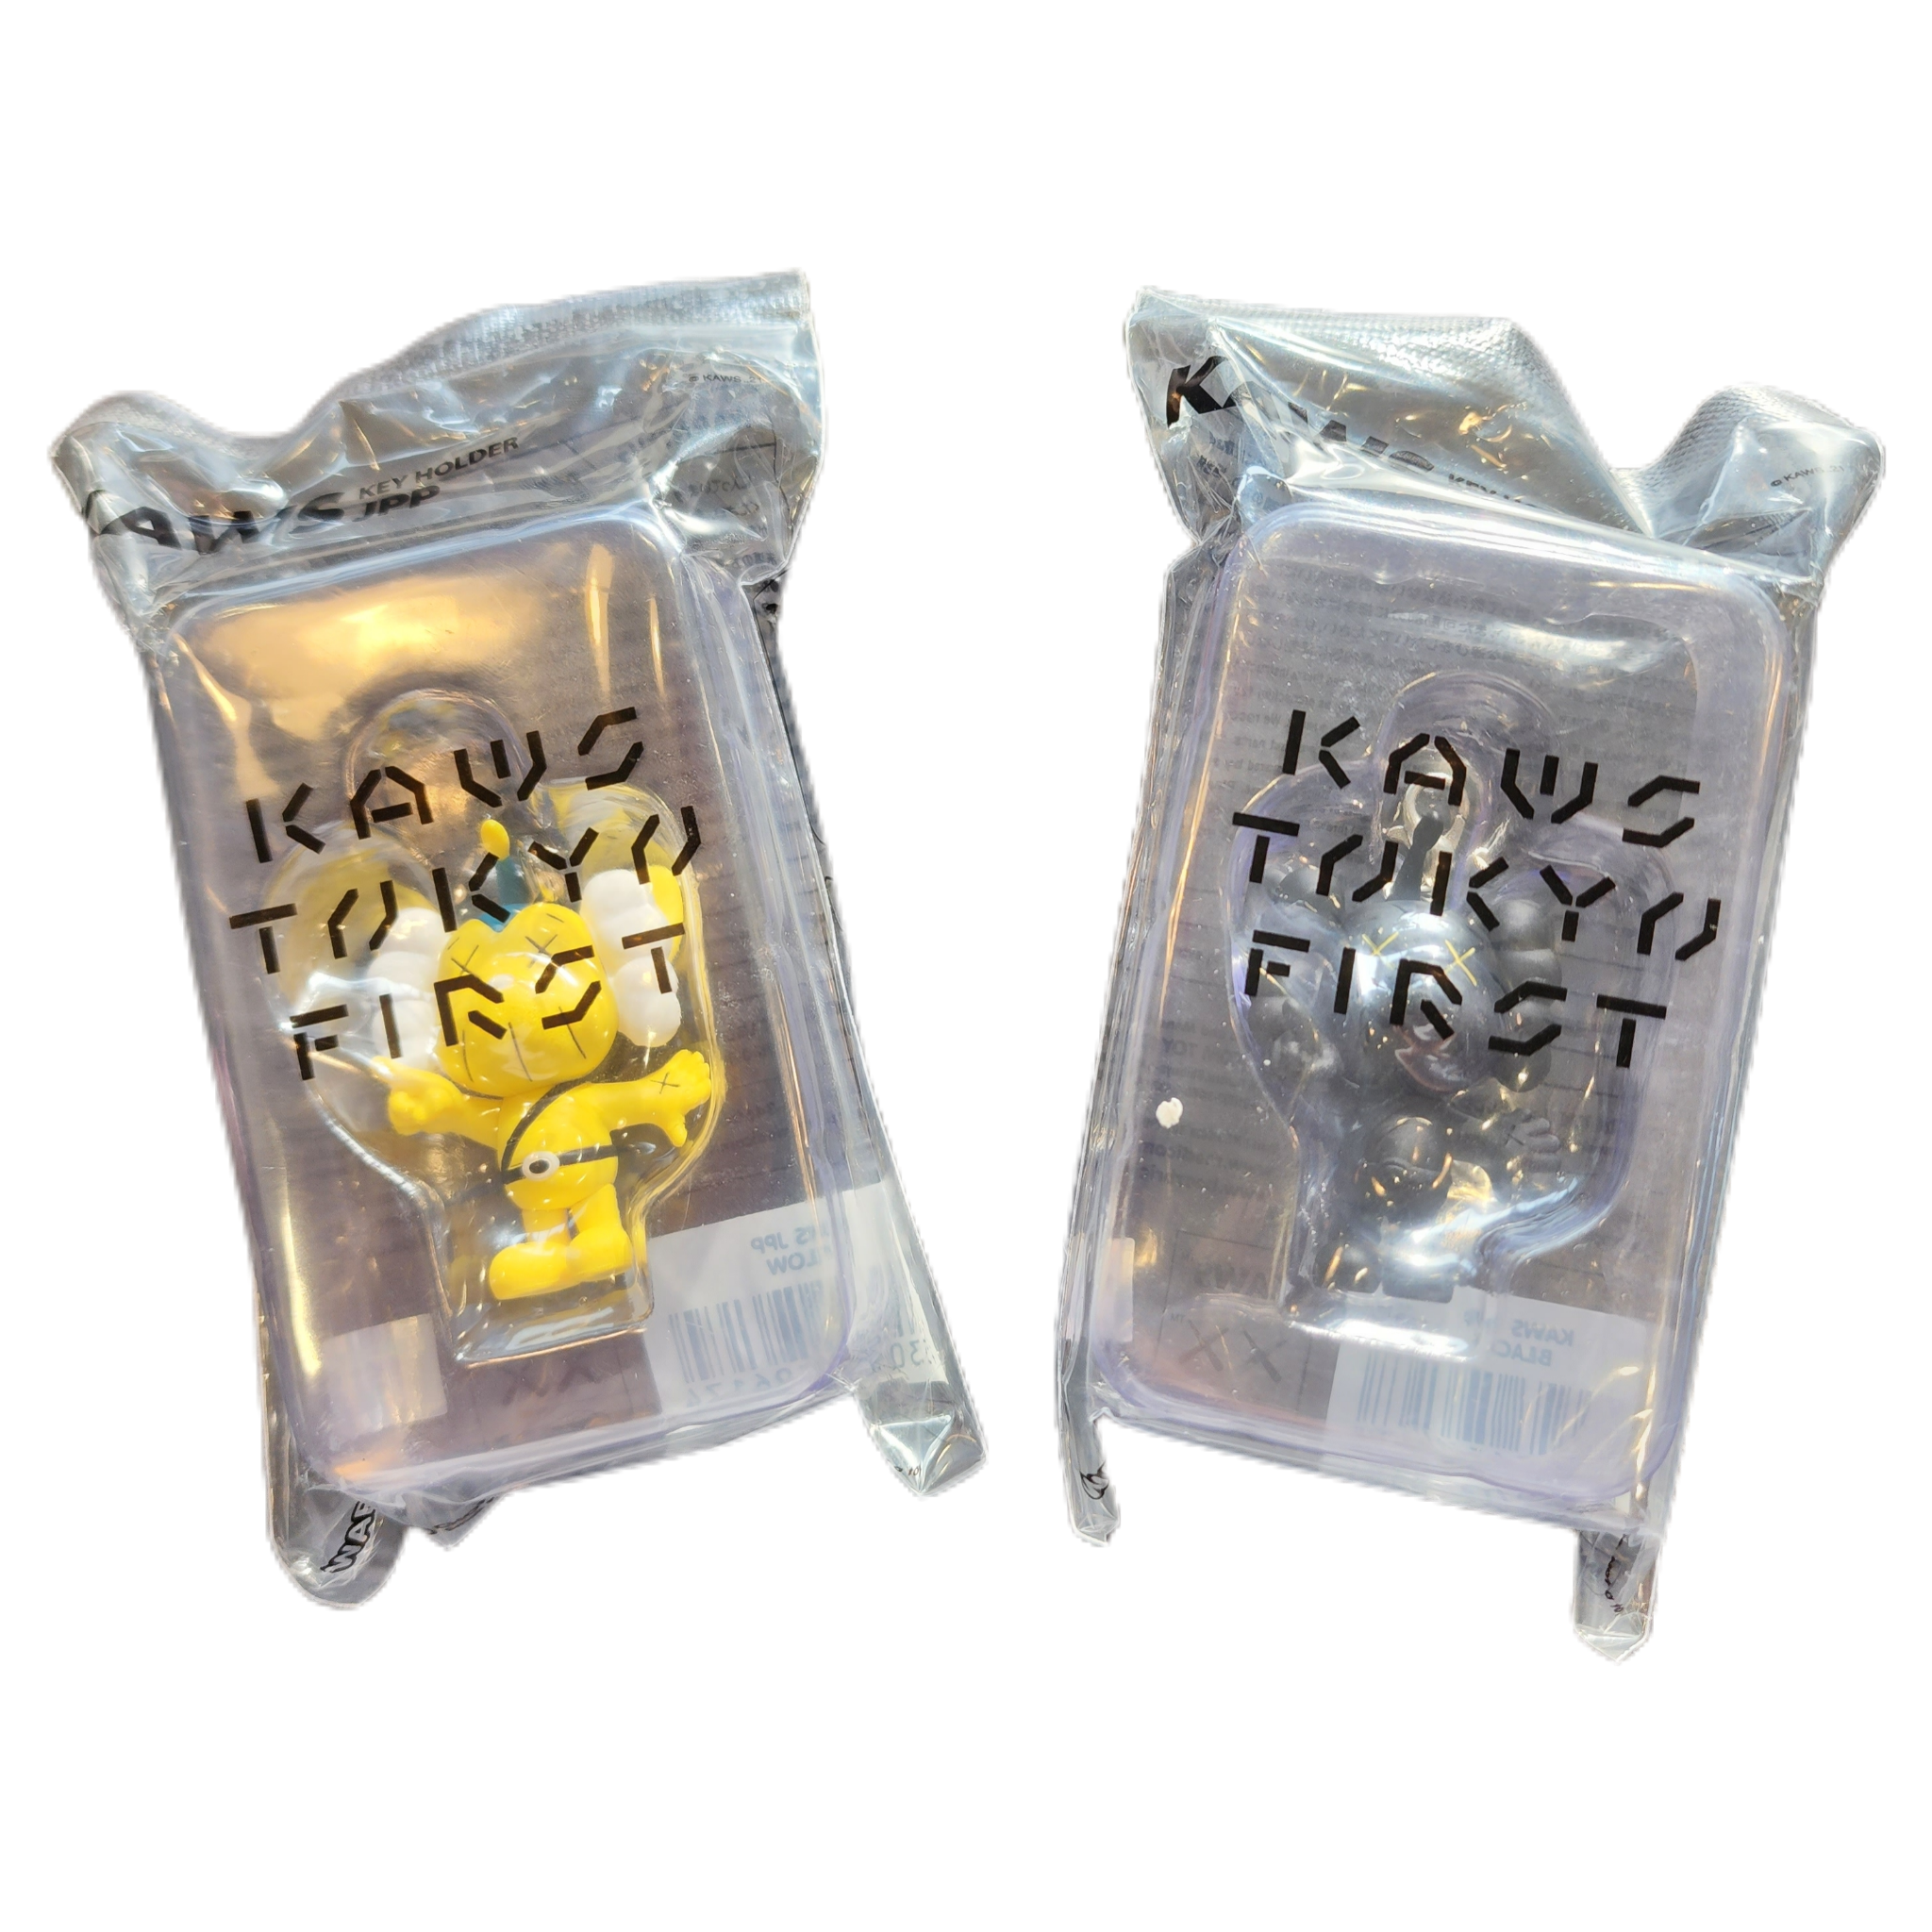 KAWS Tokyo First JPP Keychain - The Vault Luxury Gifts